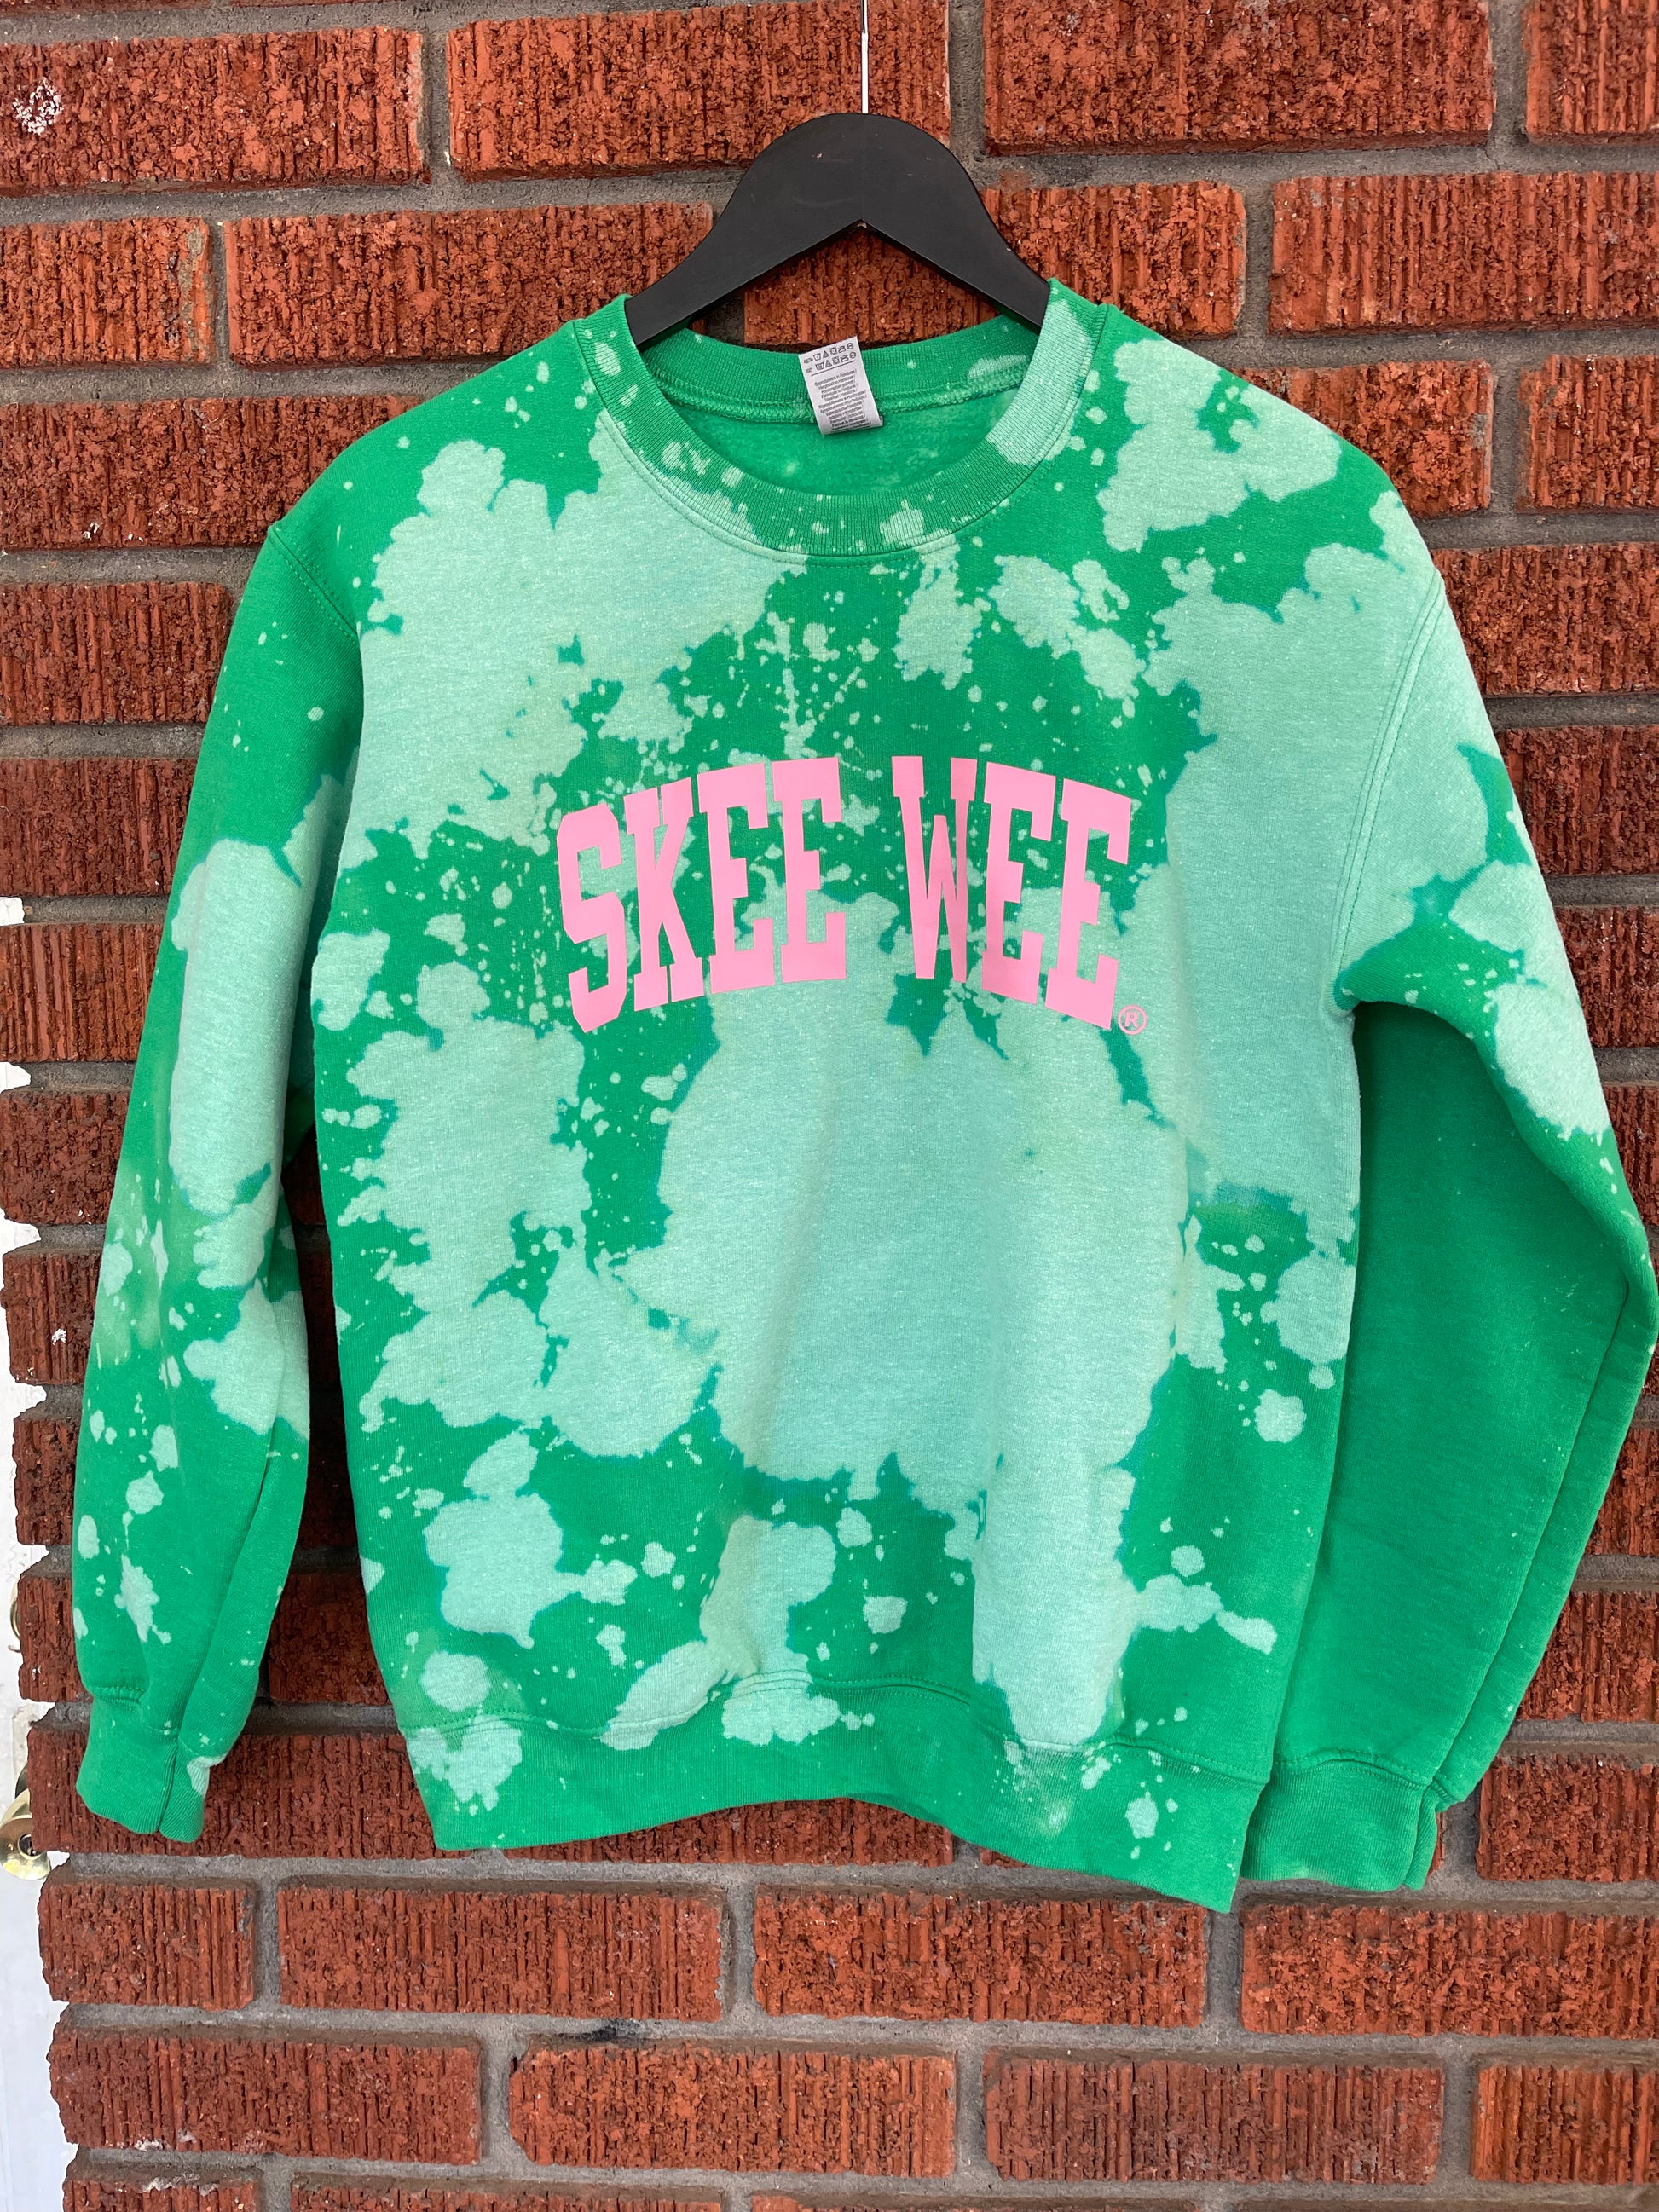 The Green Skee Wee Handmade Crew Neck Sweatshirt - [CCL Designs] - AKA Alpha Kappa Alpha Pink and Green handmade hand bleach tie dye